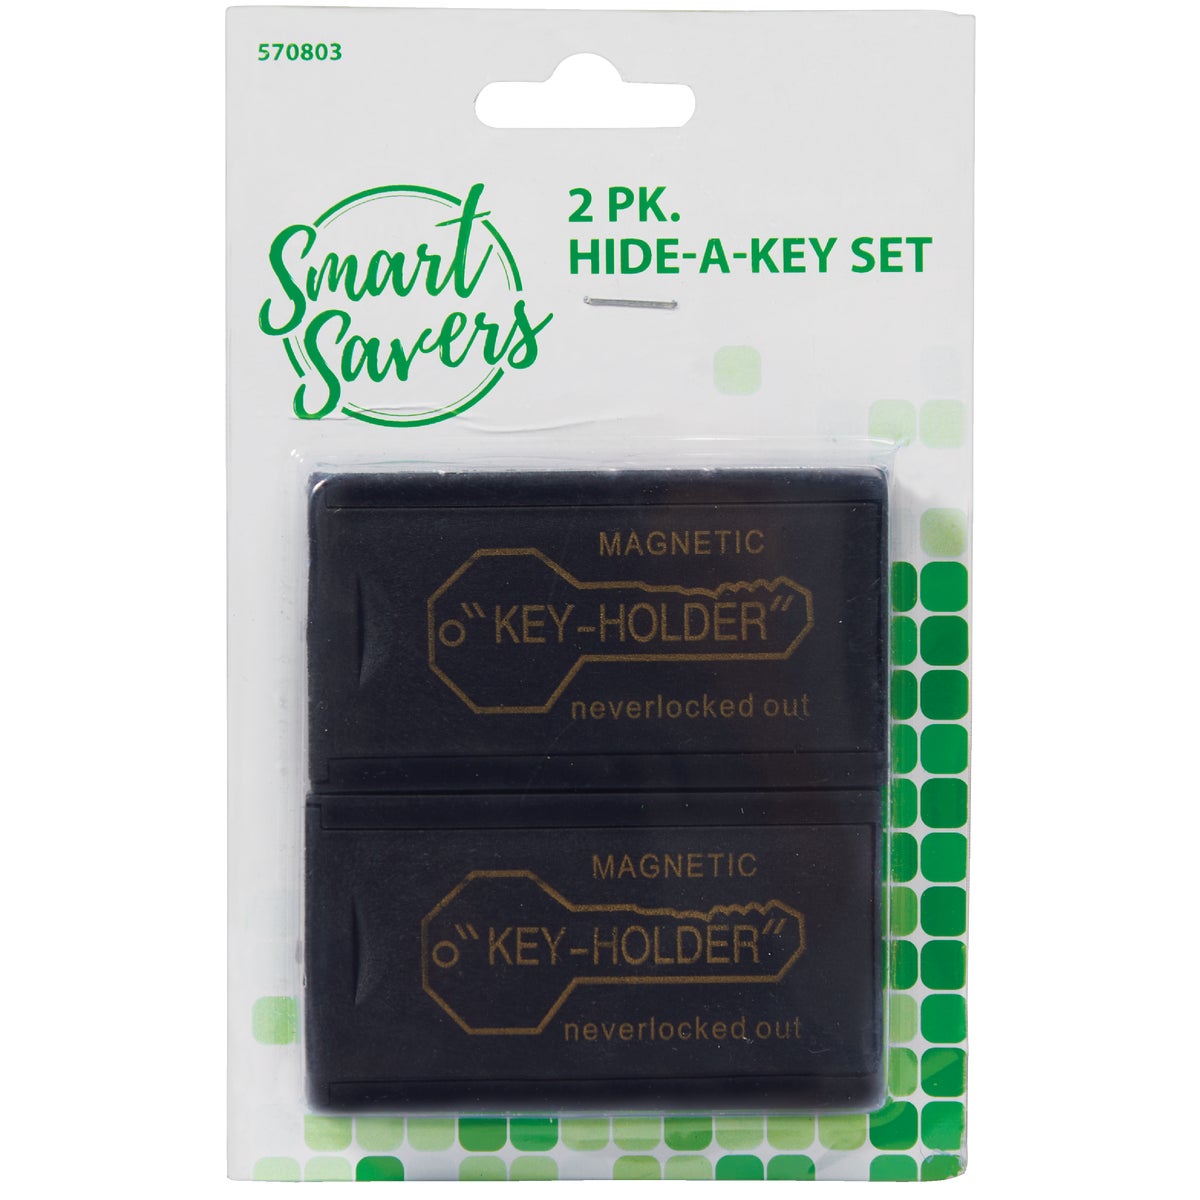 Item 570803, Smart Savers magnetic Hide-A-Key.